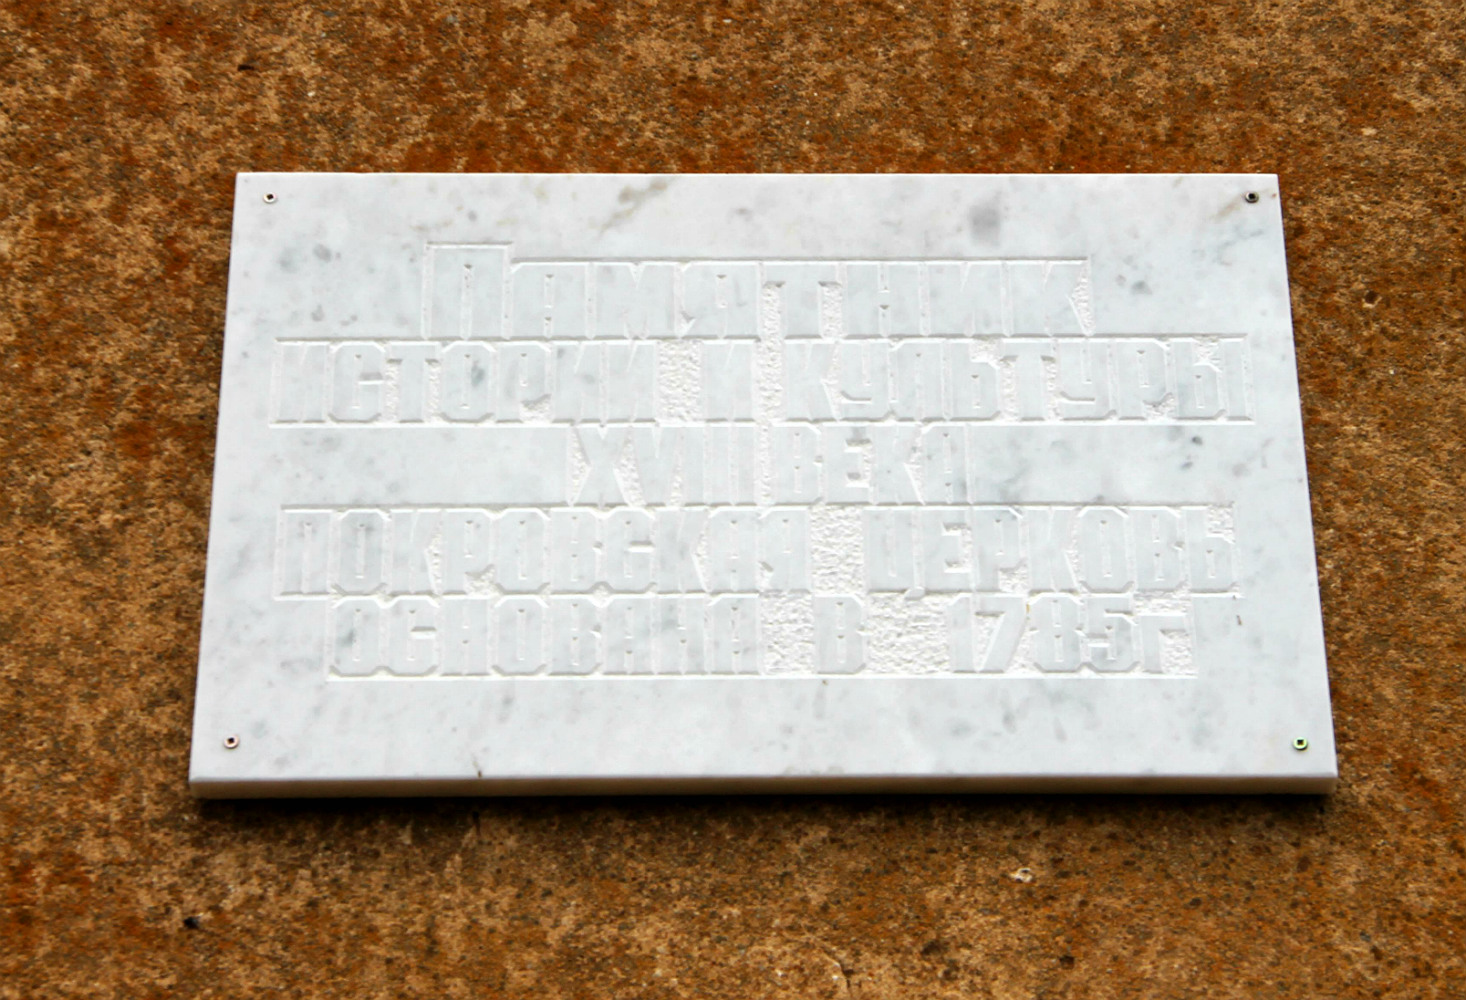 Semiluky District, other localities, . Semiluky District, other localities — Memorial plaques